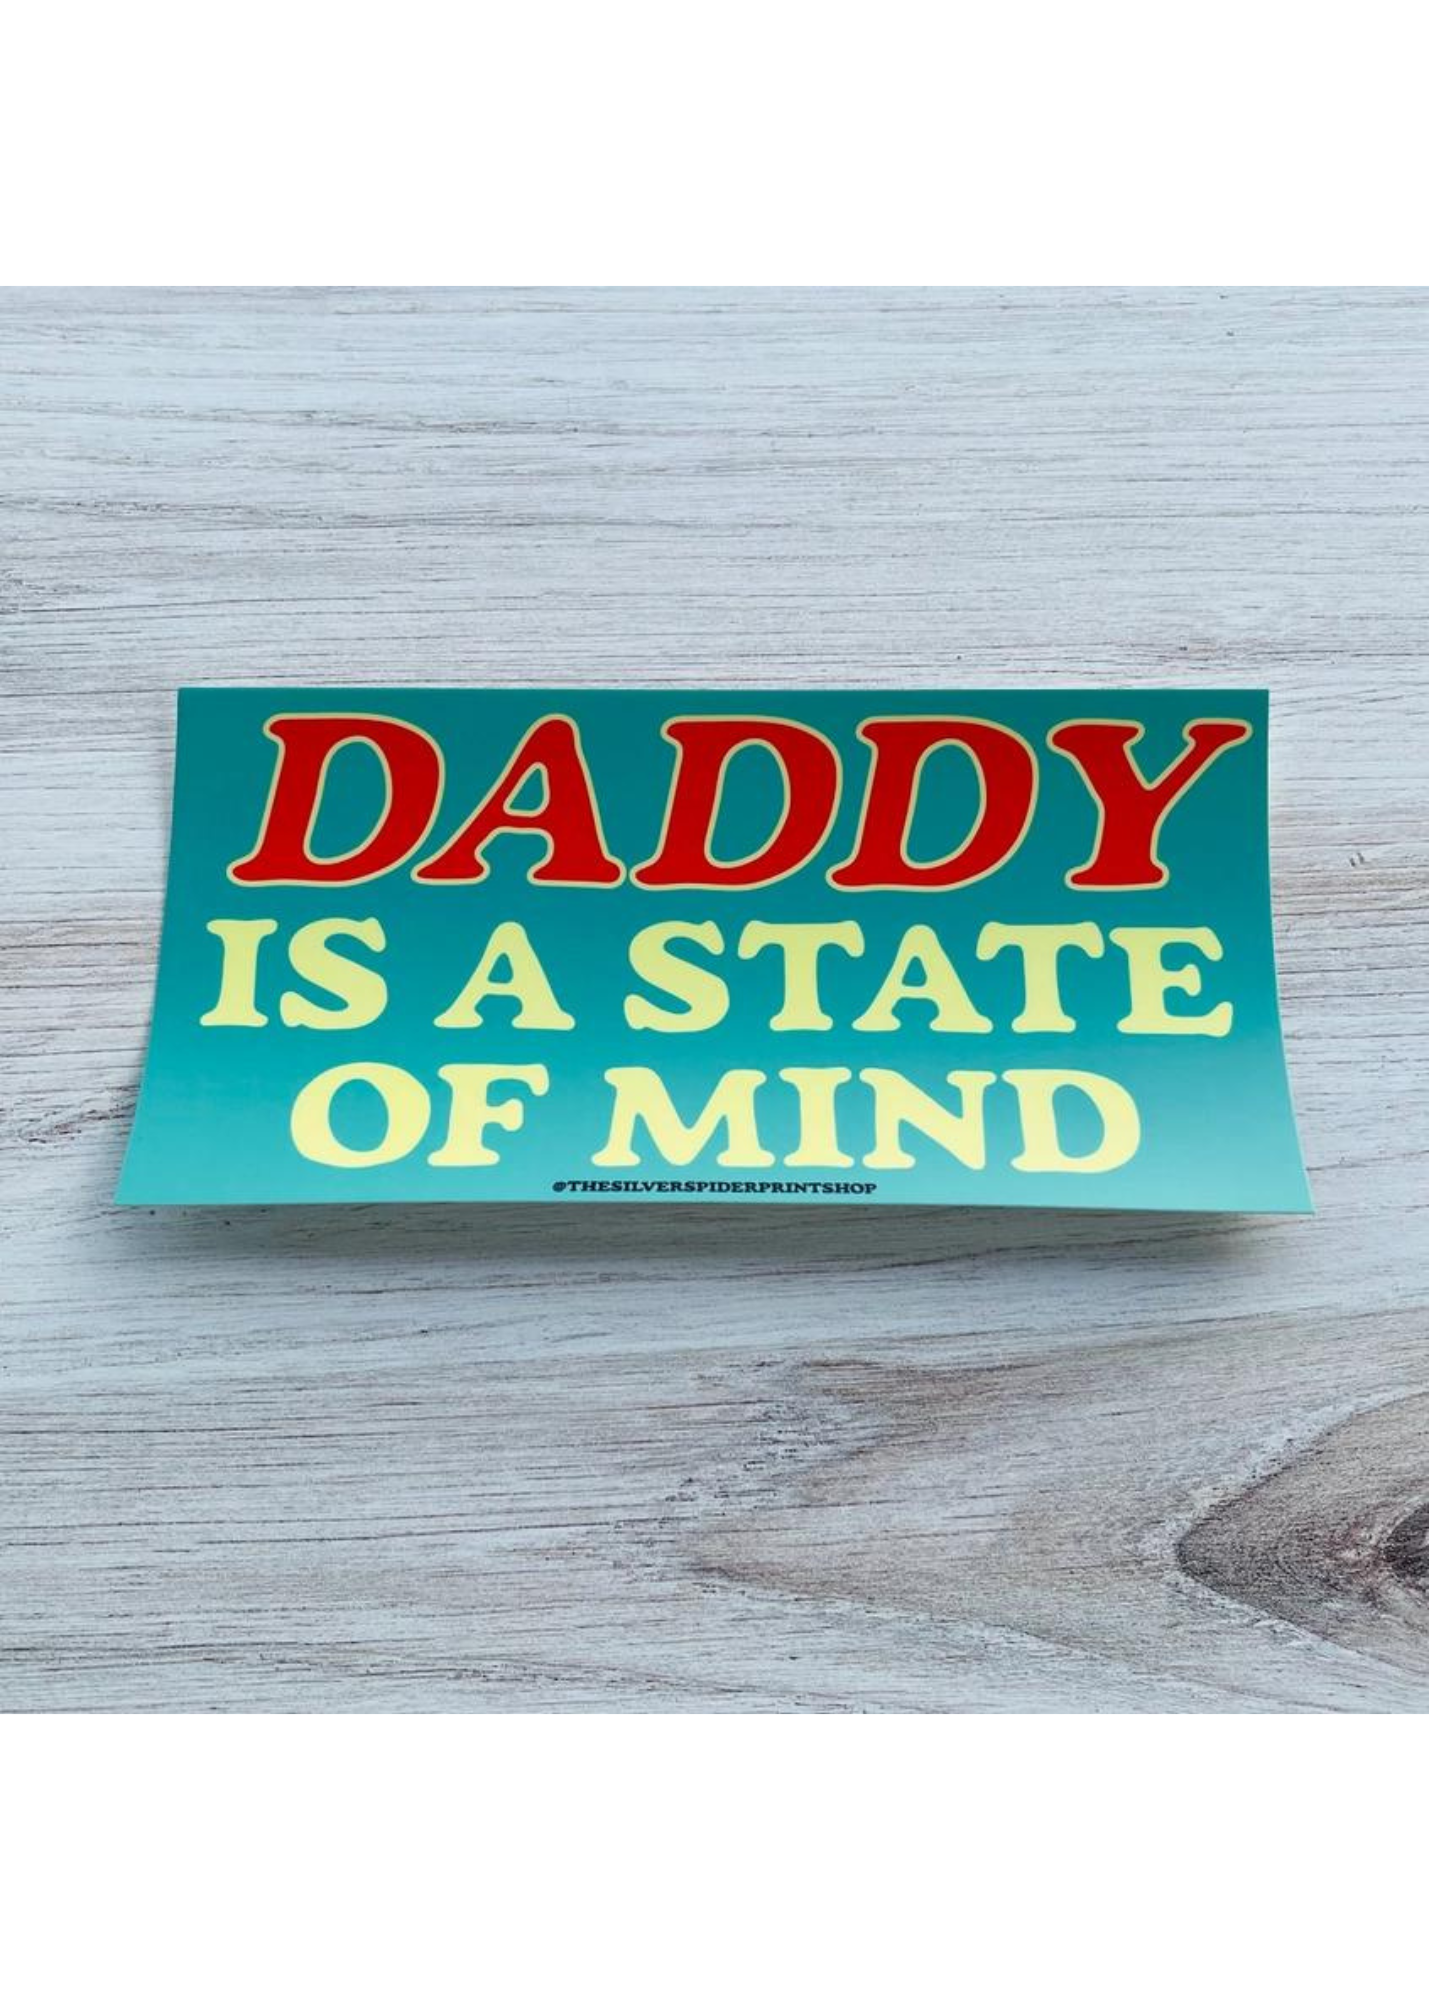 Daddy Bumper Sticker